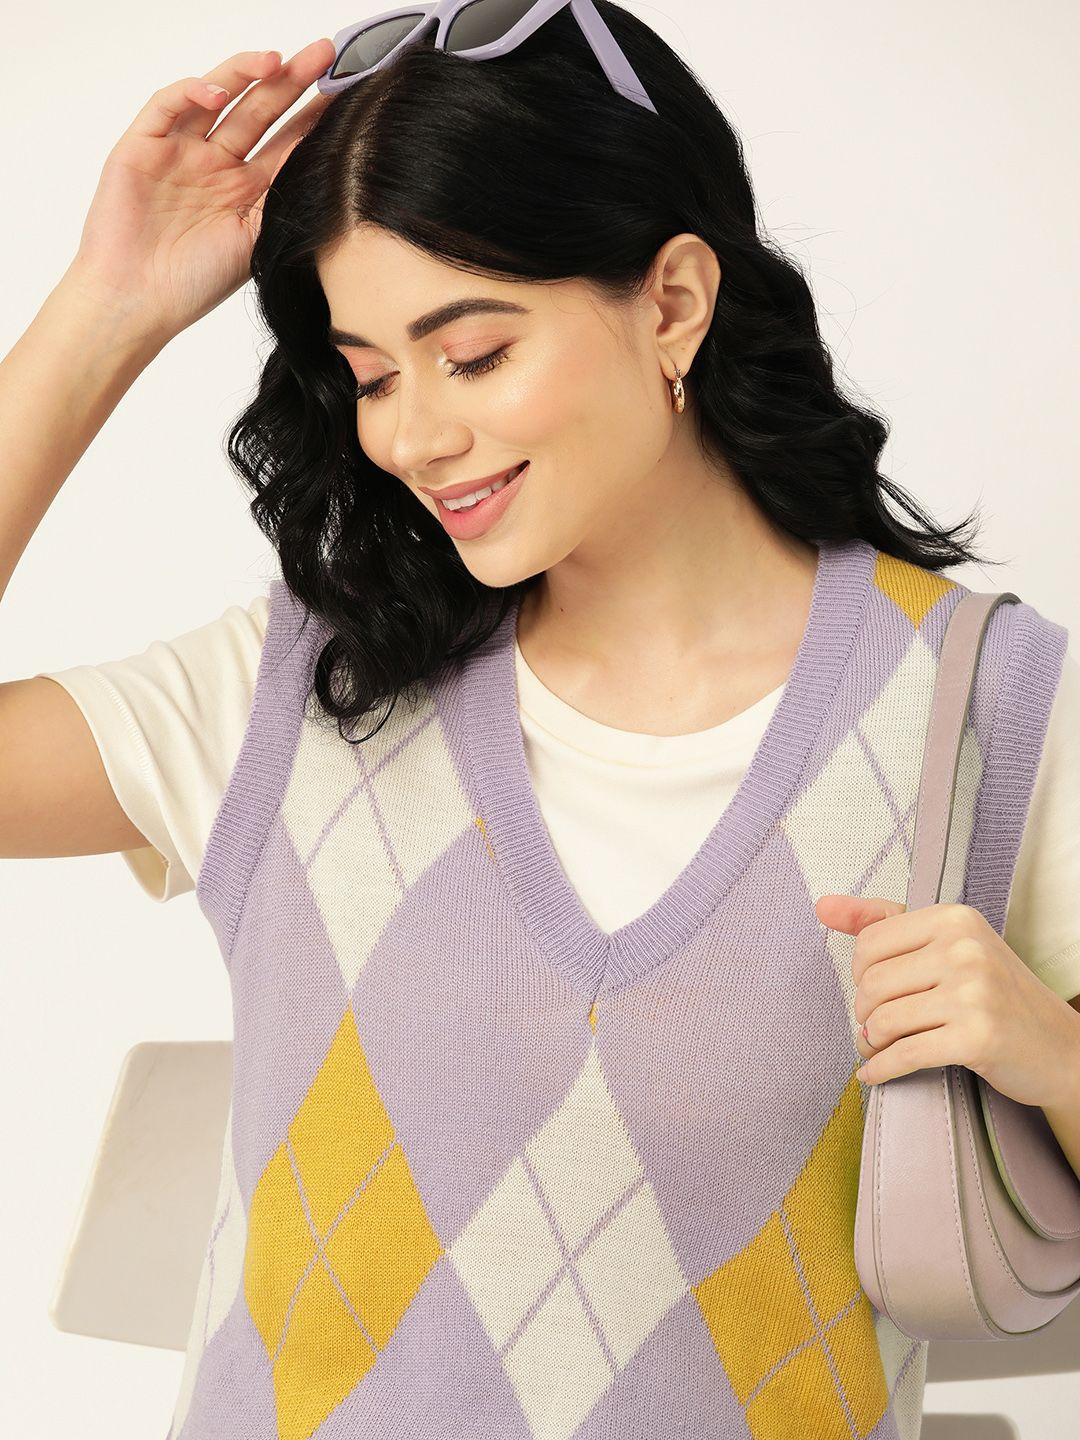 4wrd by dressberry women lavender & off white geometric sweater vest